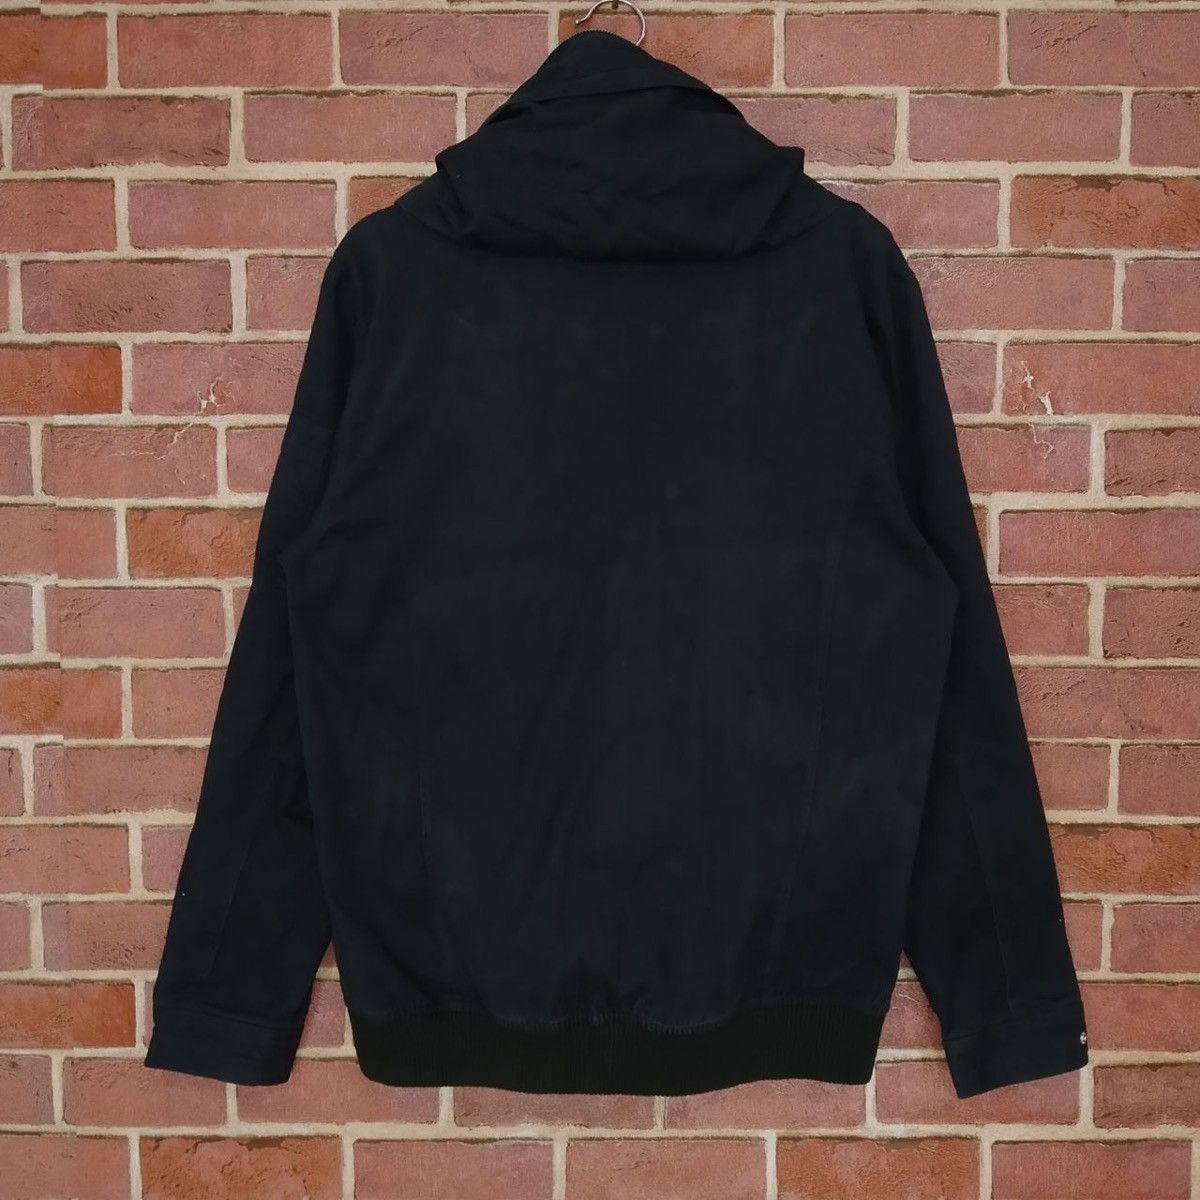 Designer Japan Brand Here’s Street Hidden Hoodie Jacket Size US M / EU 48-50 / 2 - 2 Preview